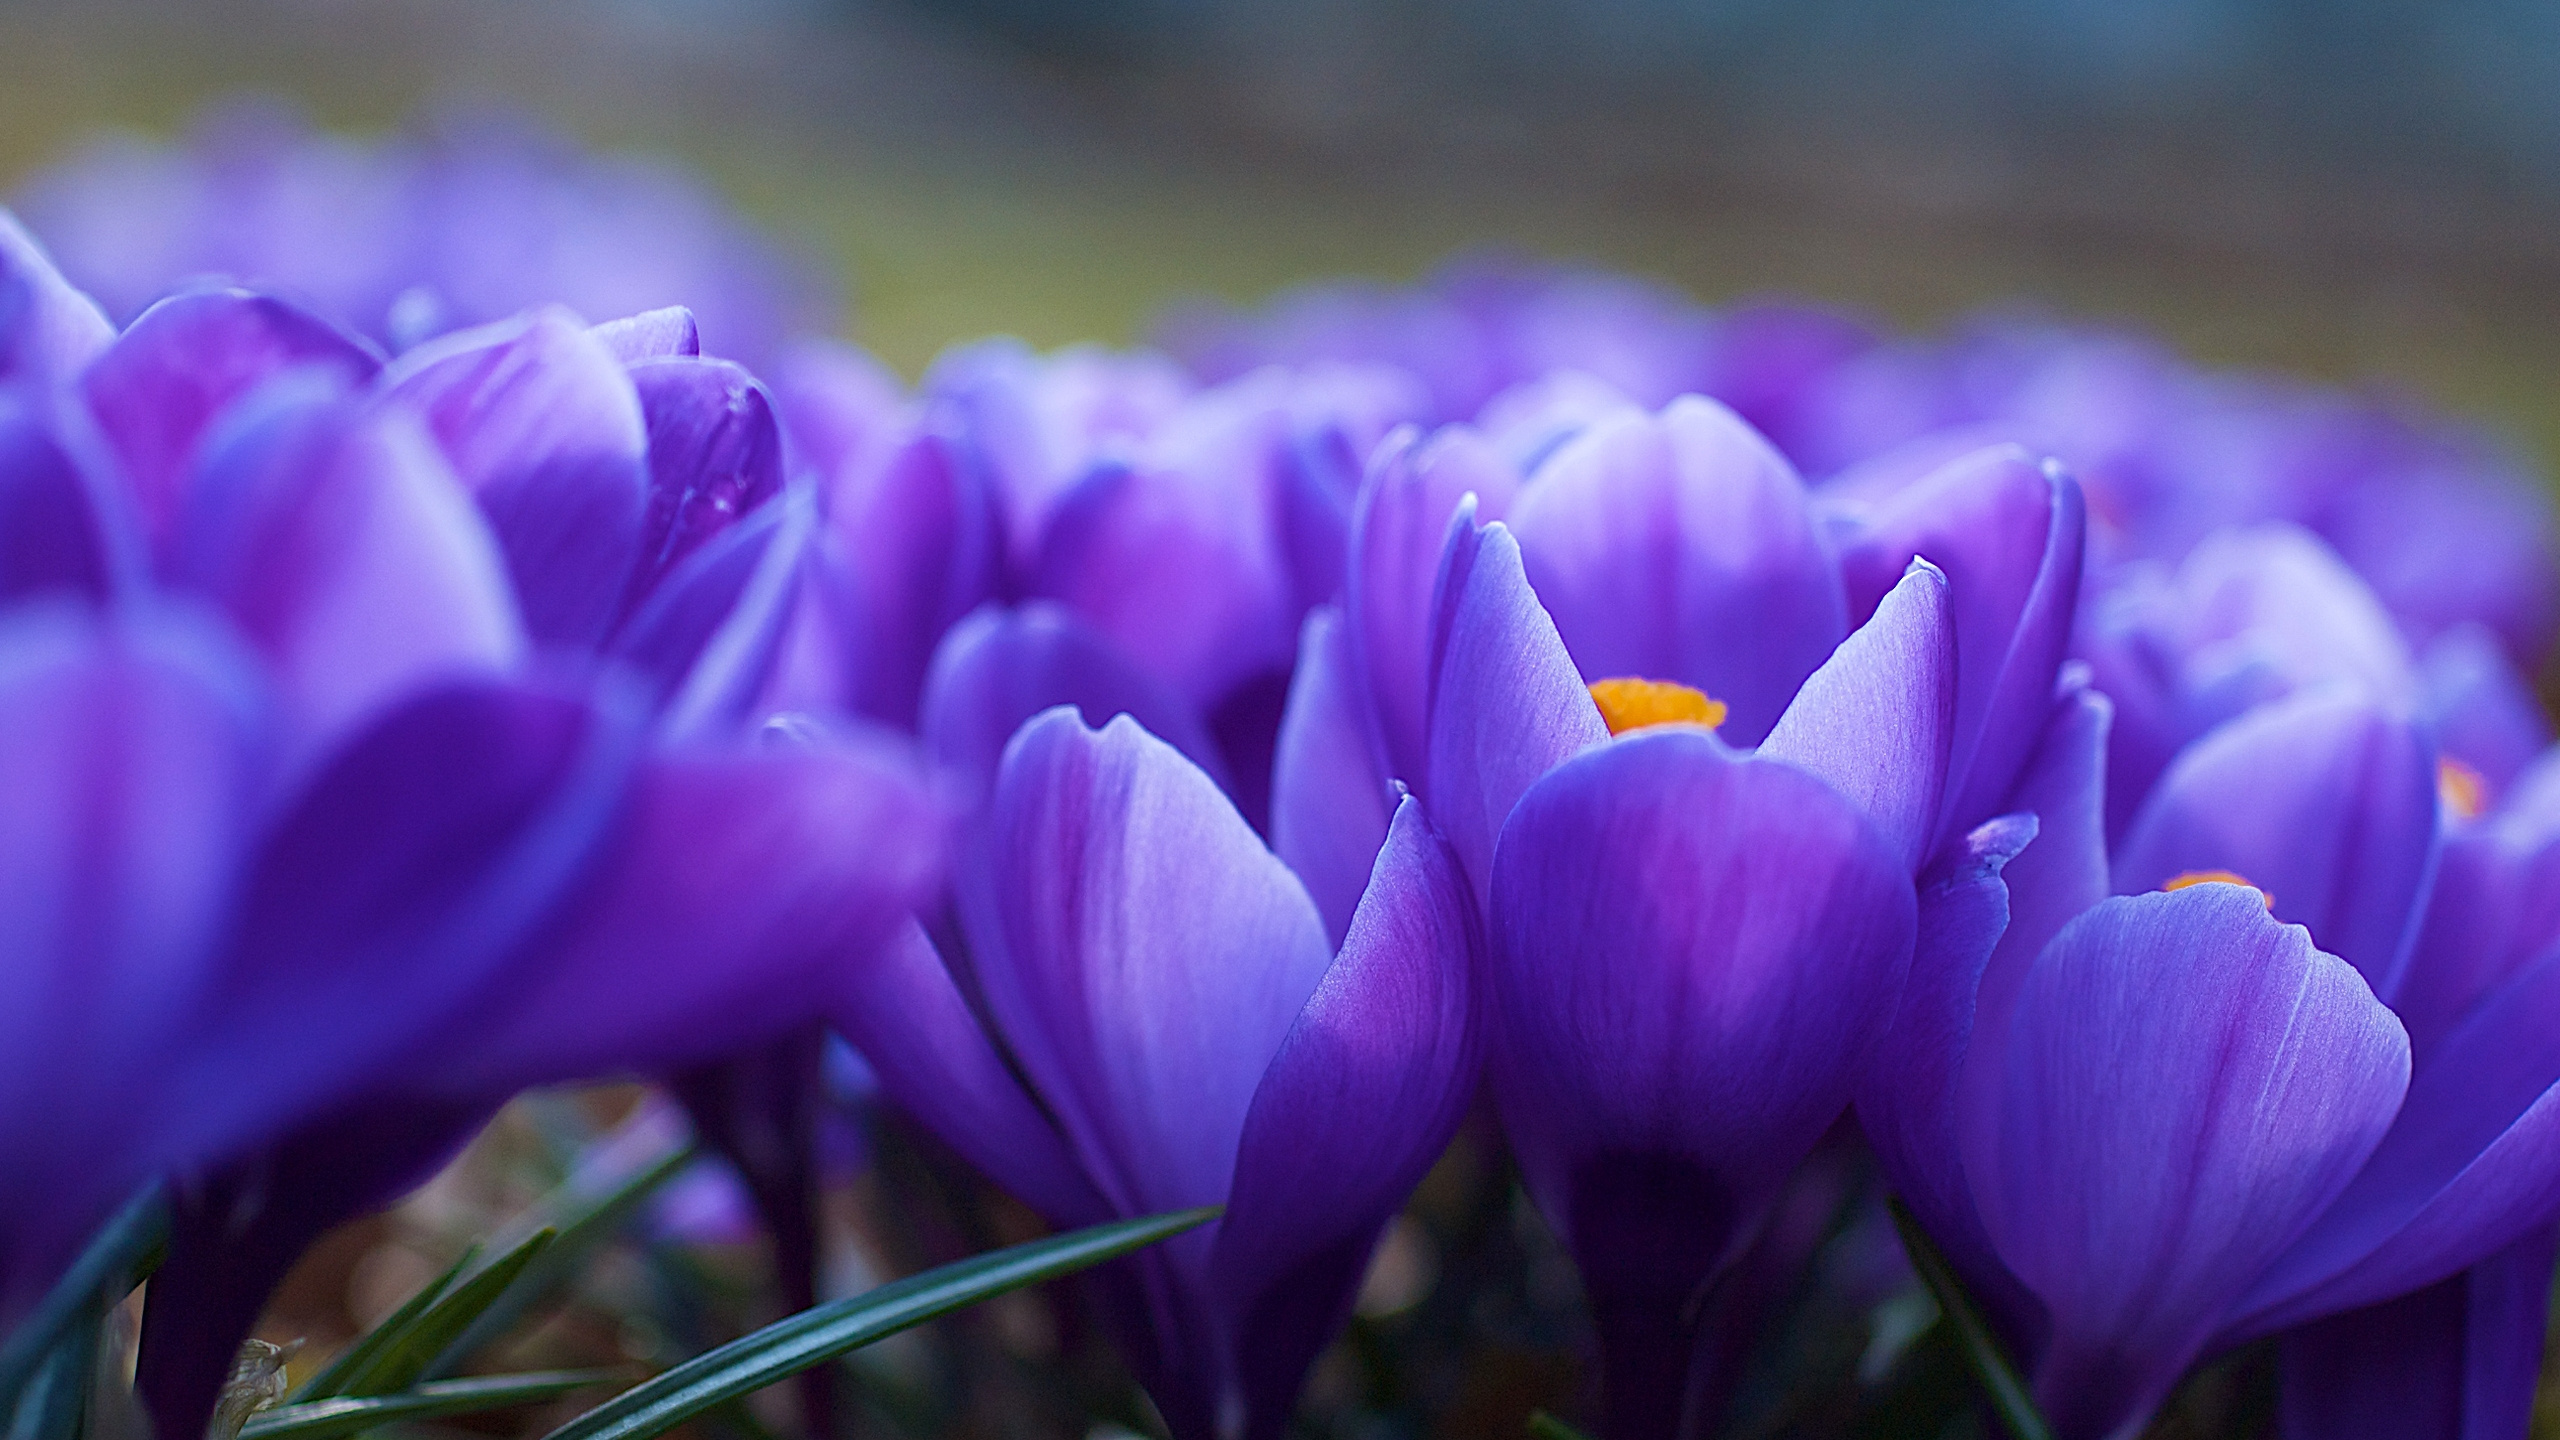 Purple Crocus Flowers in Bloom During Daytime. Wallpaper in 2560x1440 Resolution